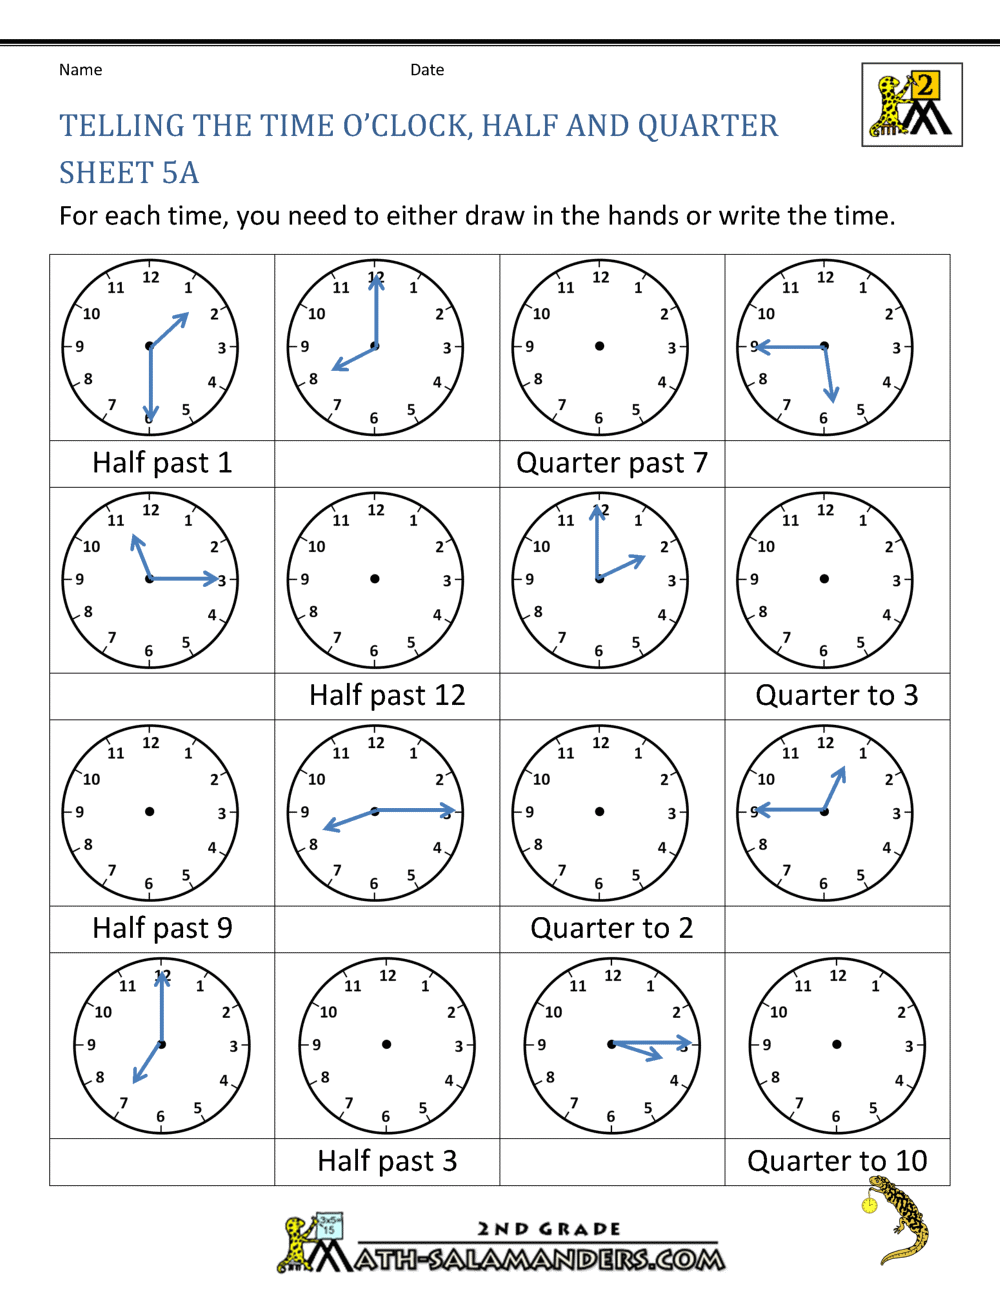 time-o-clock-and-half-past-worksheets-printables-digital-analogue